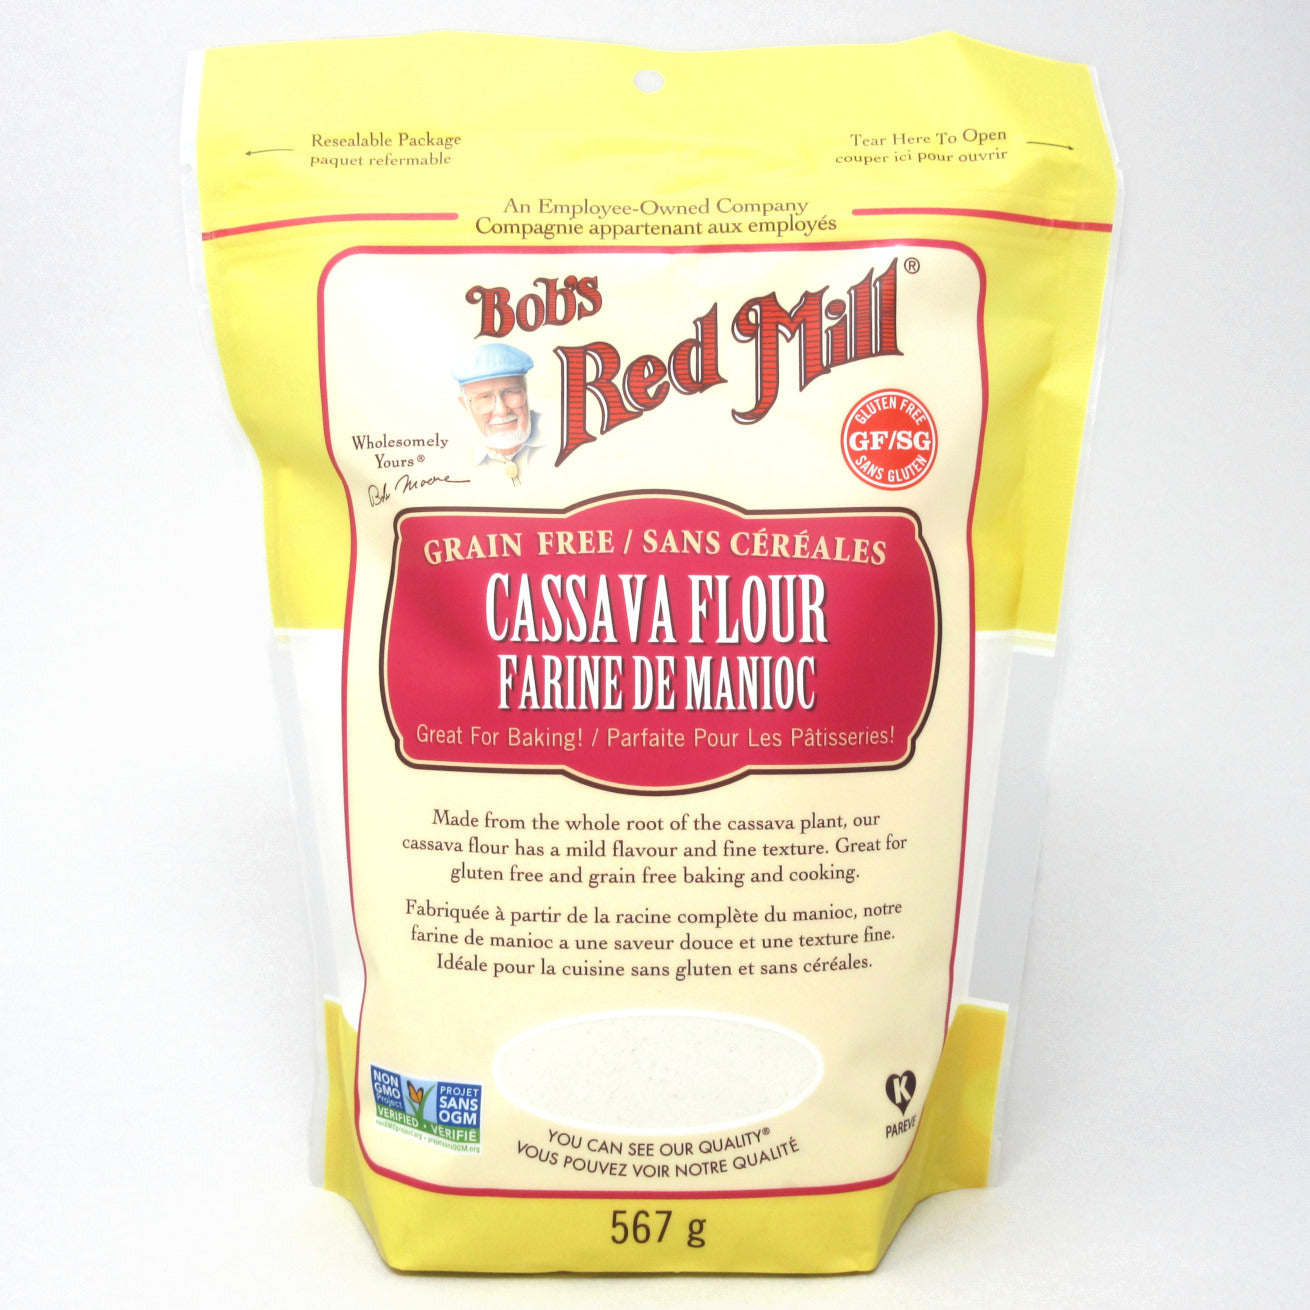 Flour Barrel product image - Bob's Red Mill Cassava Flour